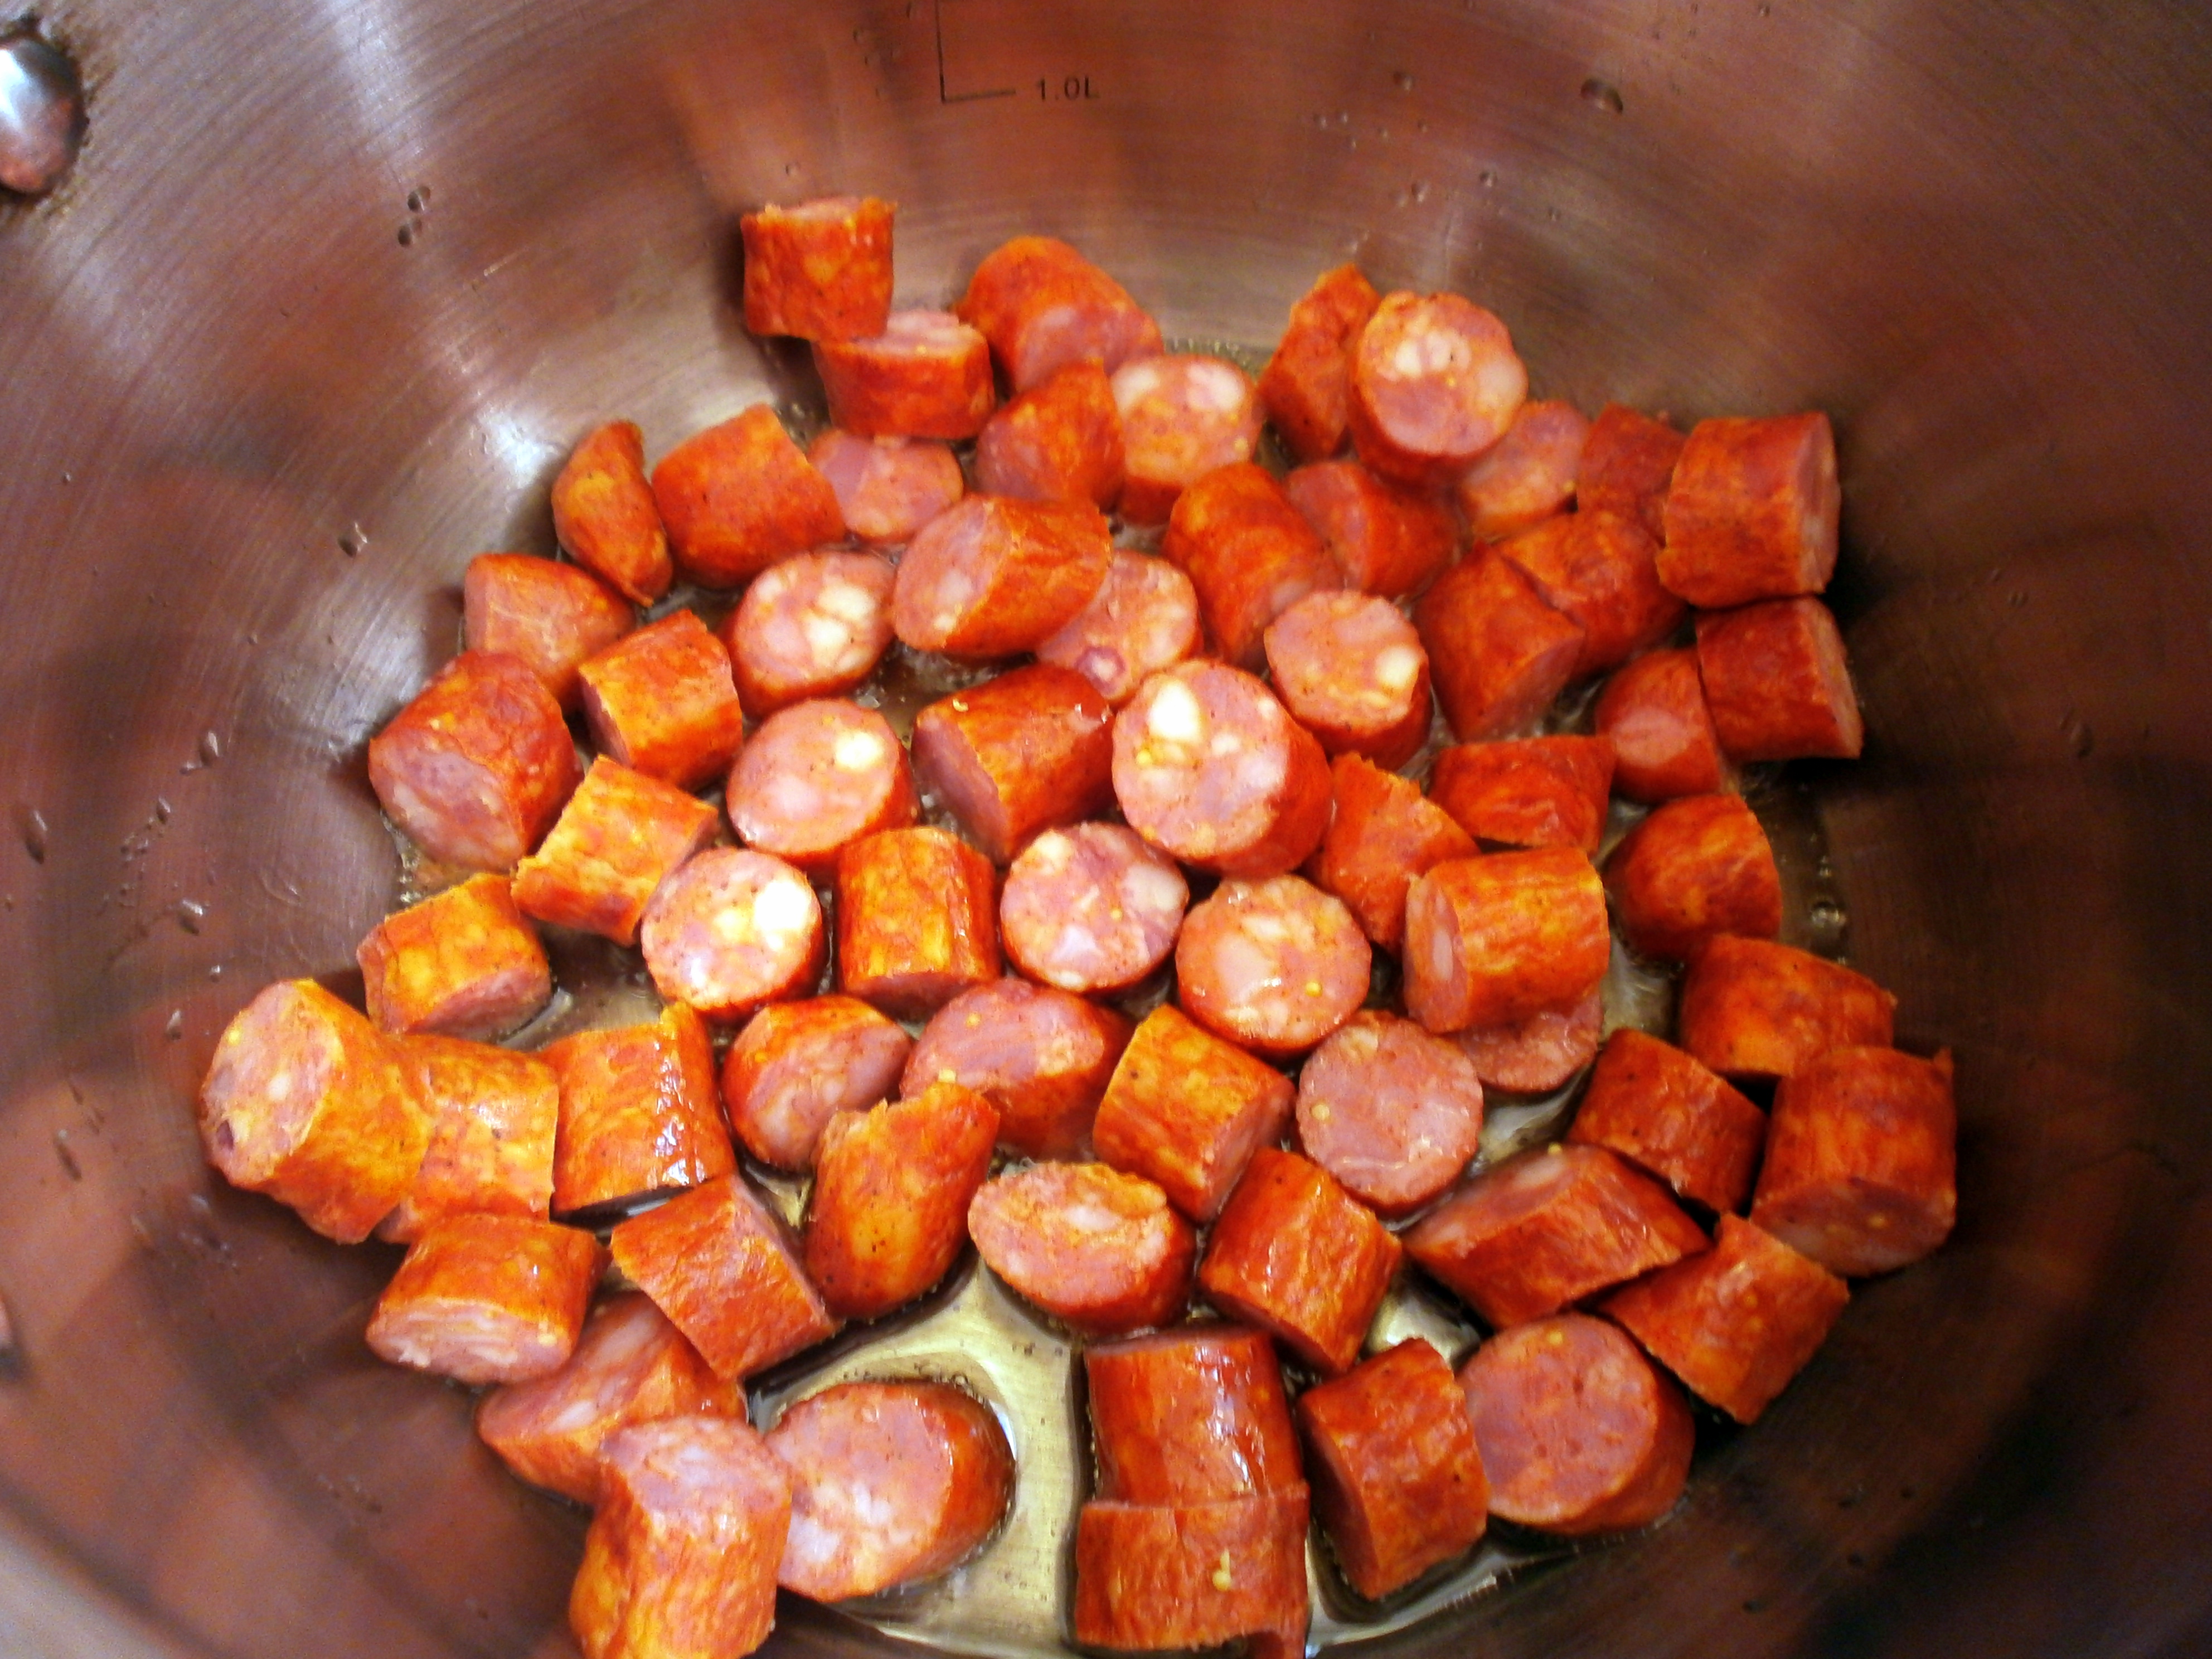 Varza calita cu carnati afumati - Savoare si gust intr-un preparat traditional